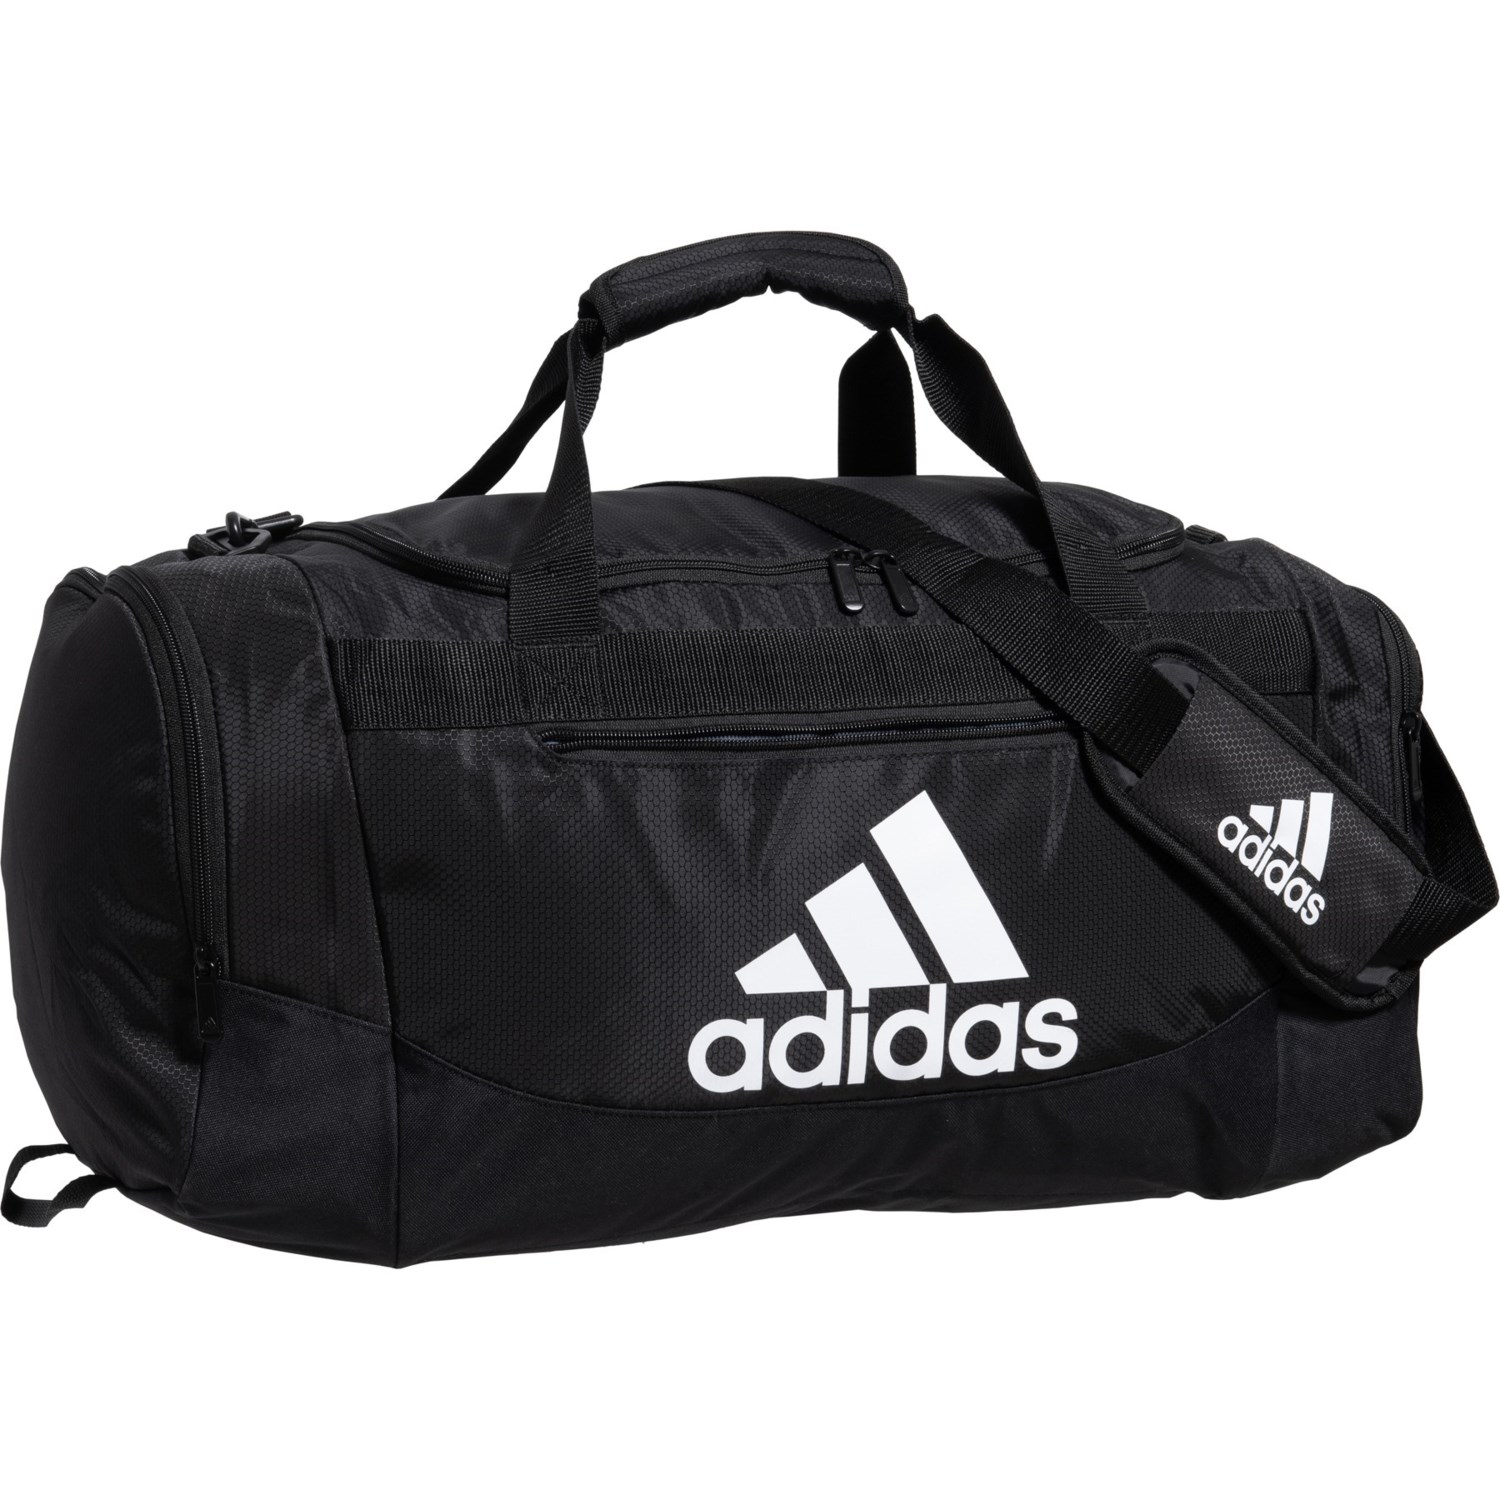 Adidas Defense 2 Duffel Bag - Large